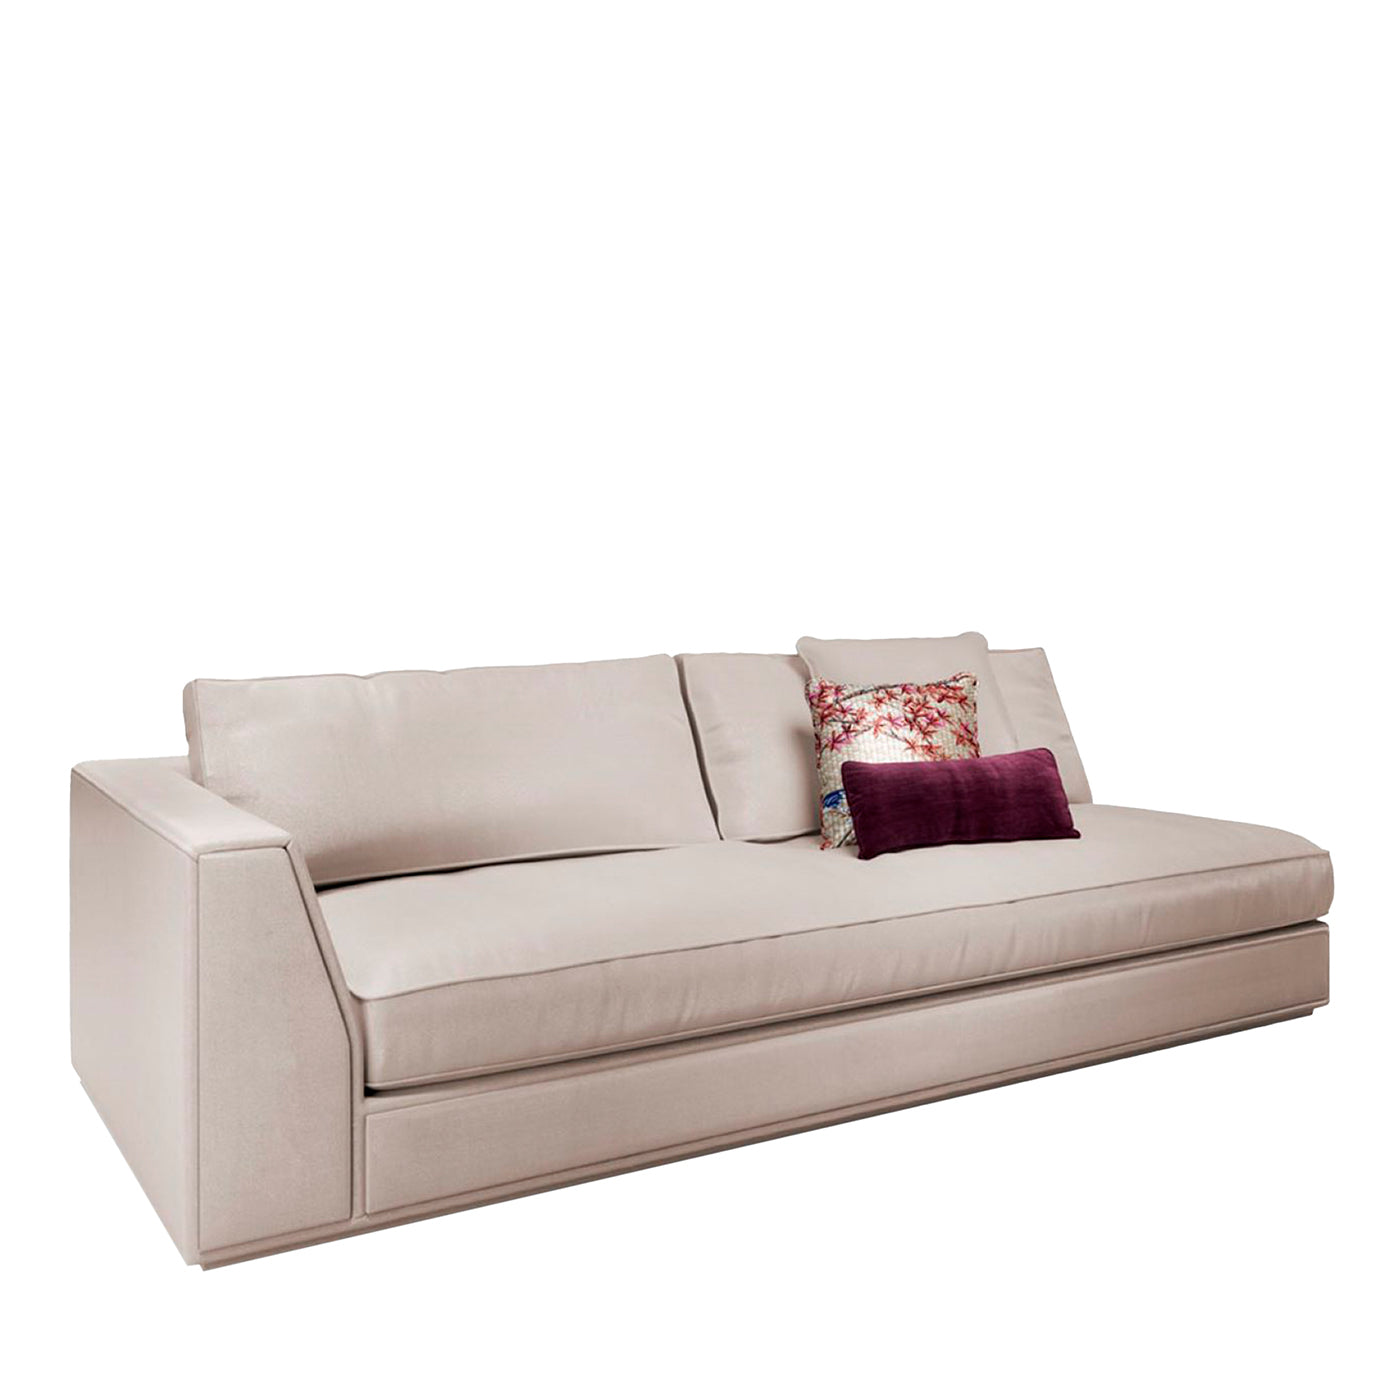 Dorian White Modular Sofa - Main view